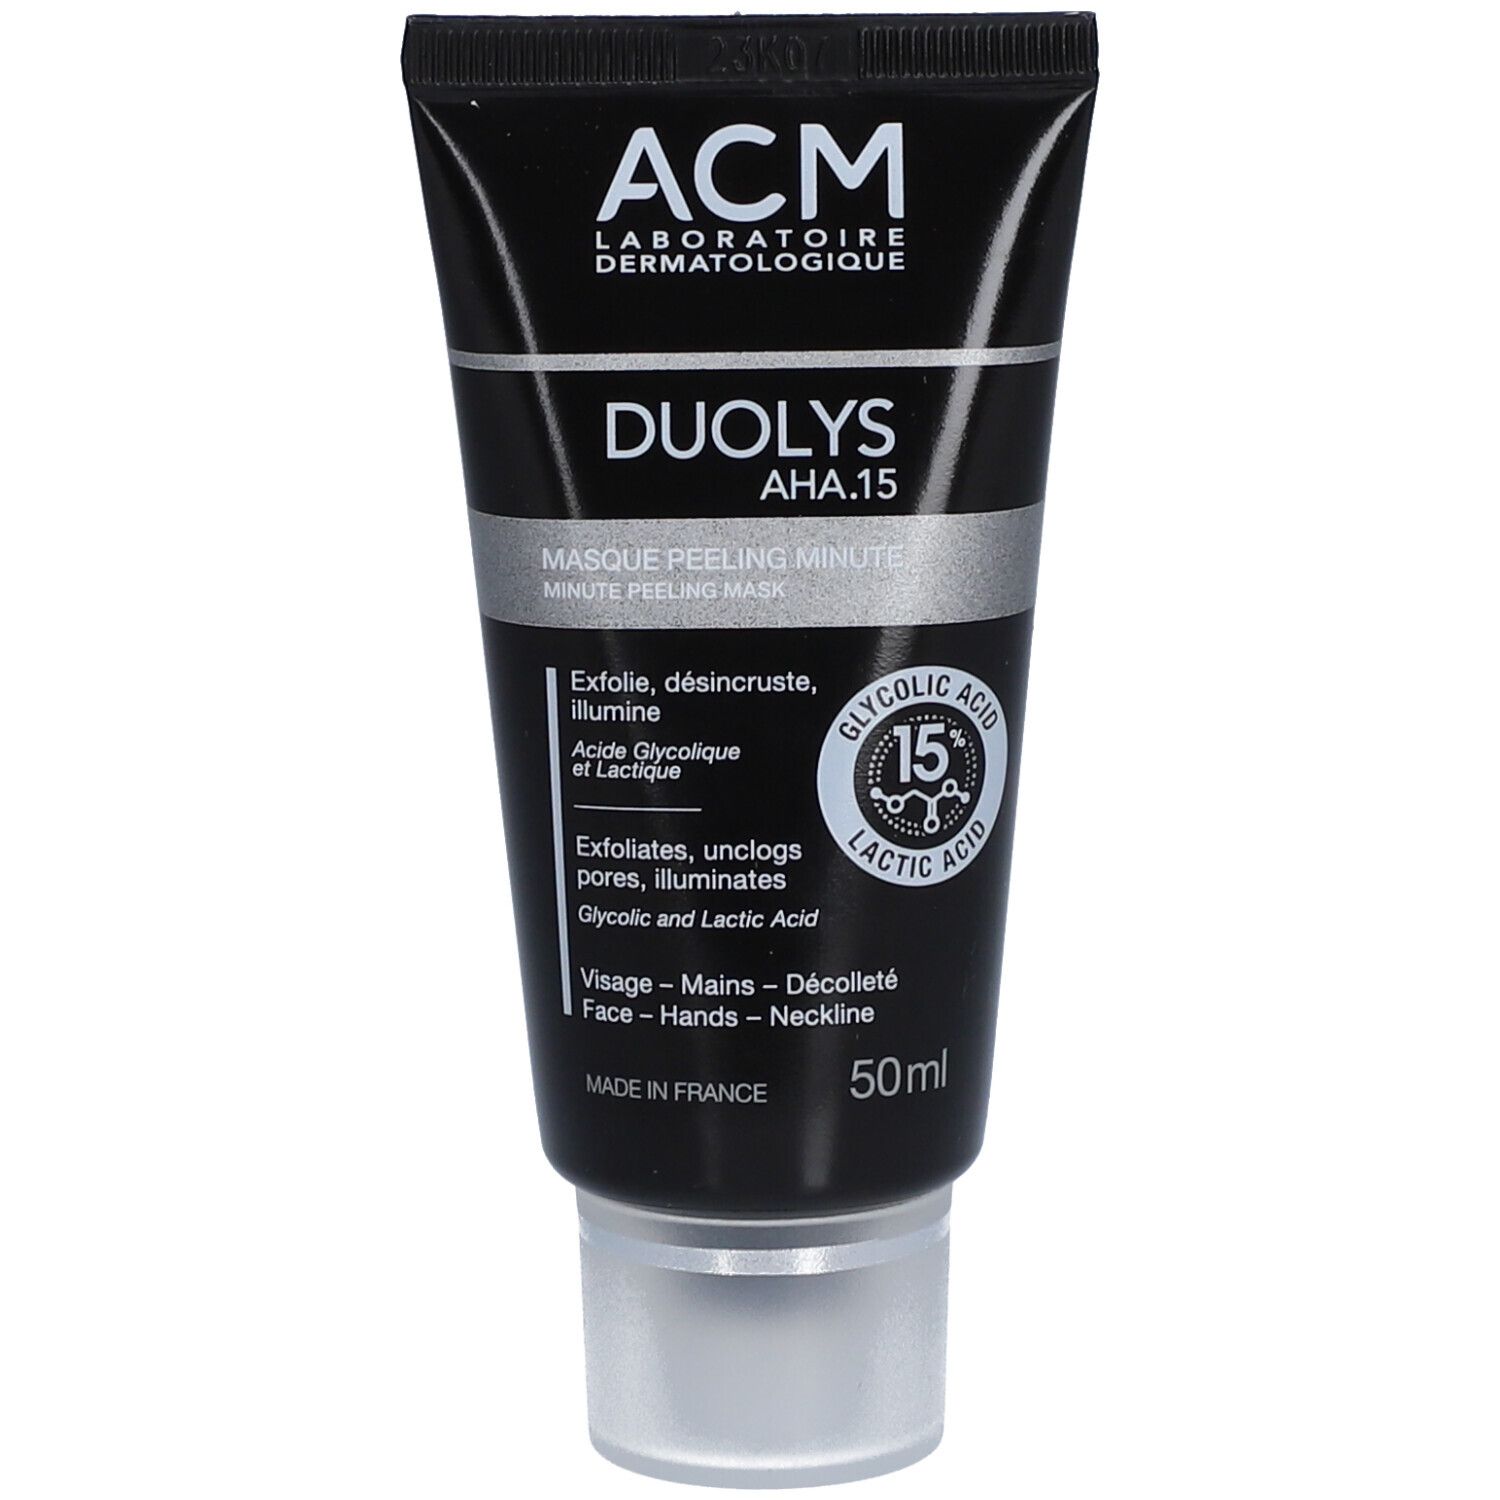 ACM Duolys Aha.15 Masque Peeling Minute